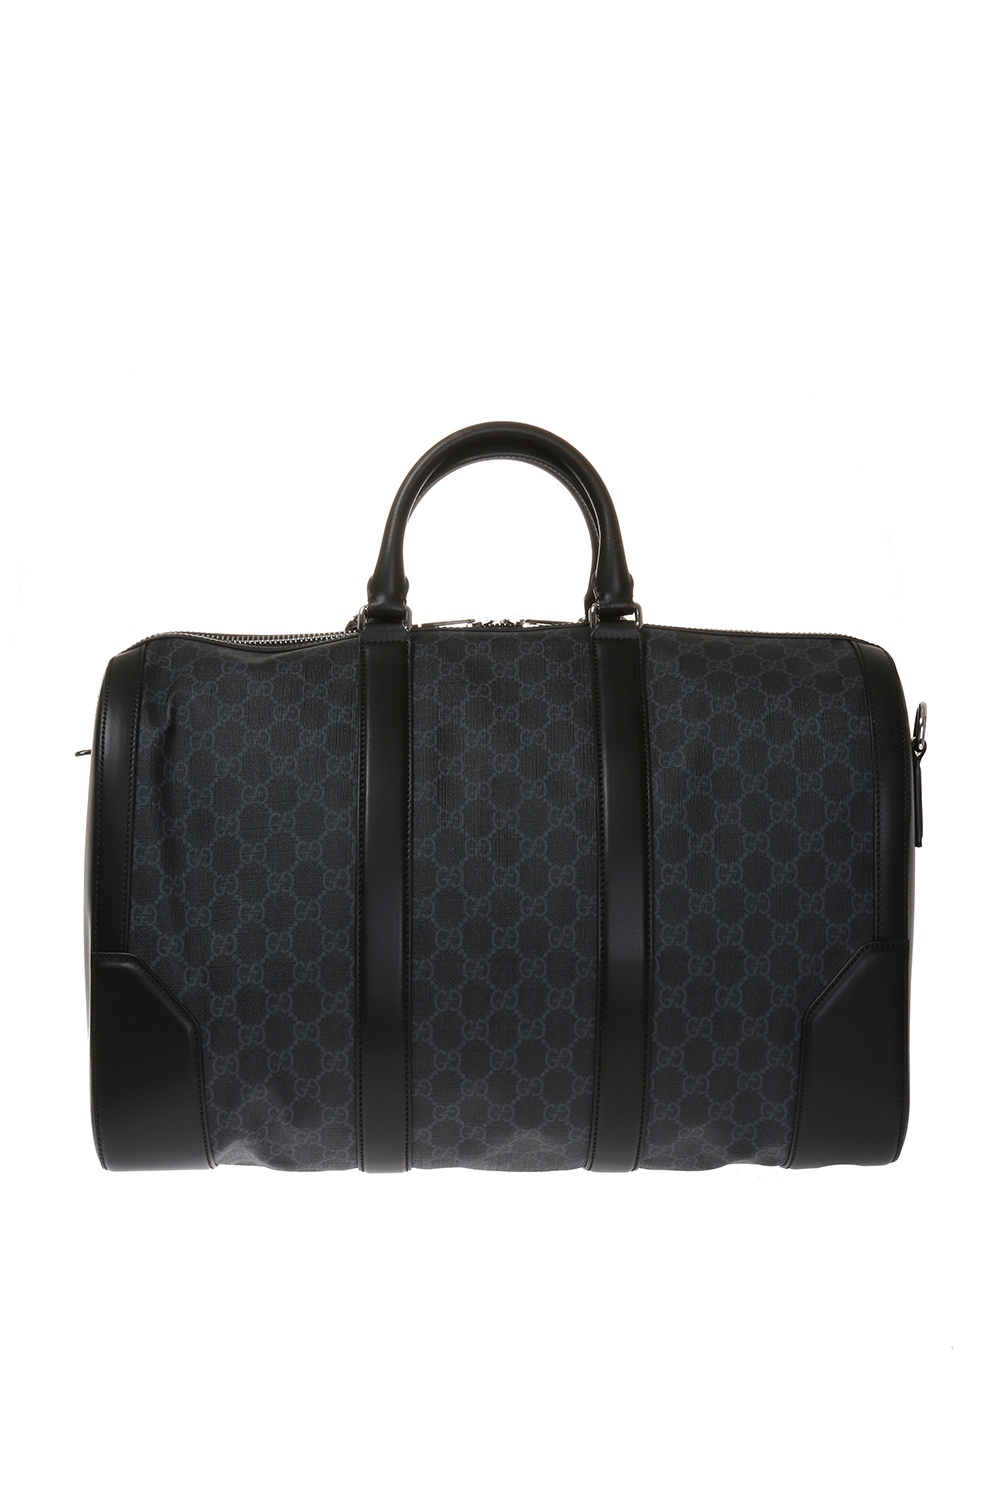 Gucci ‘GG Supreme’ holdall bag